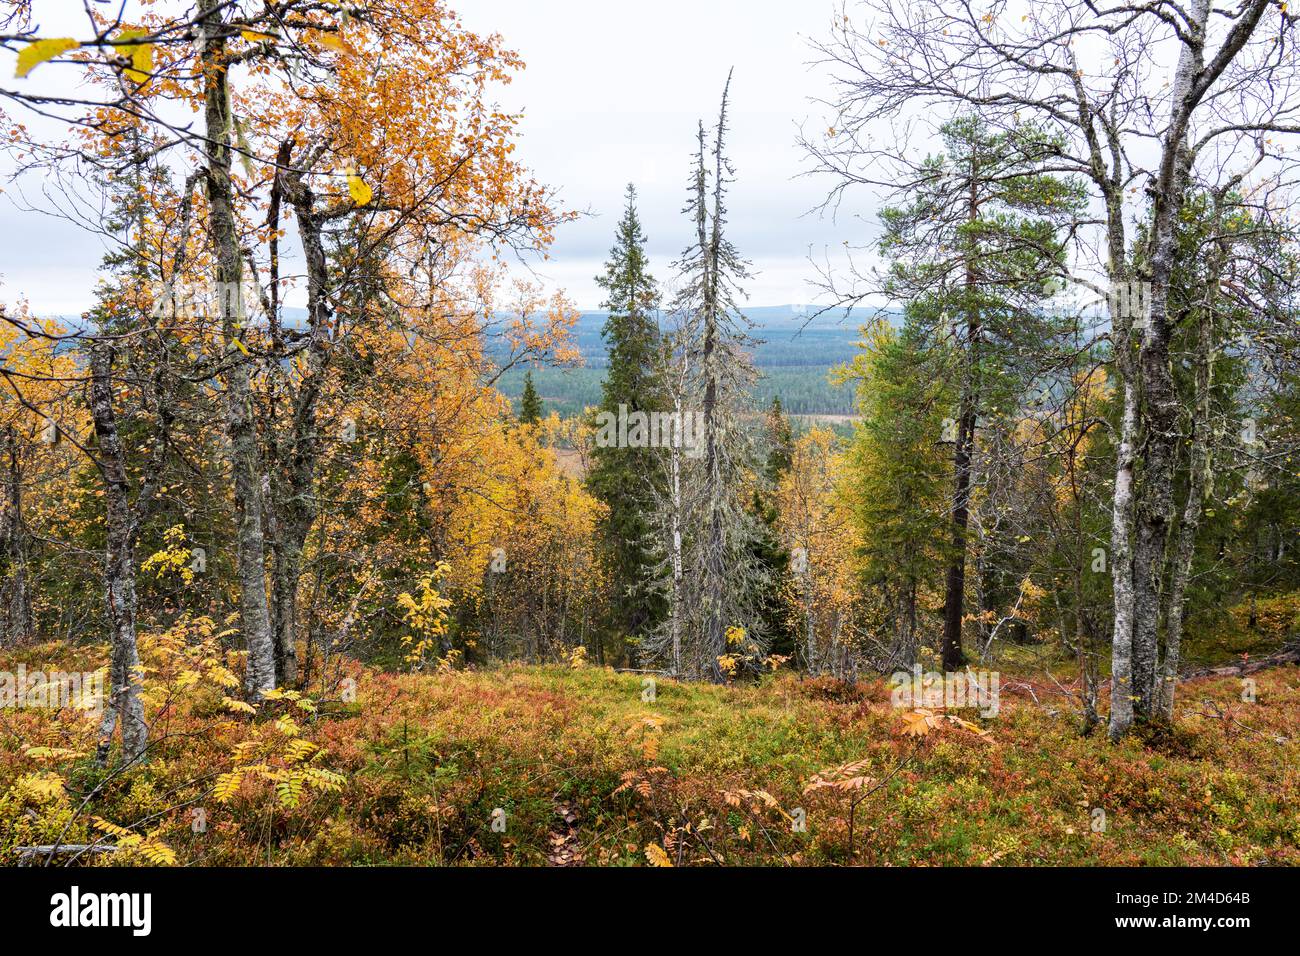 A colorful old-growth forest during fall foliage in Närängänvaara near Kuusamo, Northern Finland Stock Photo